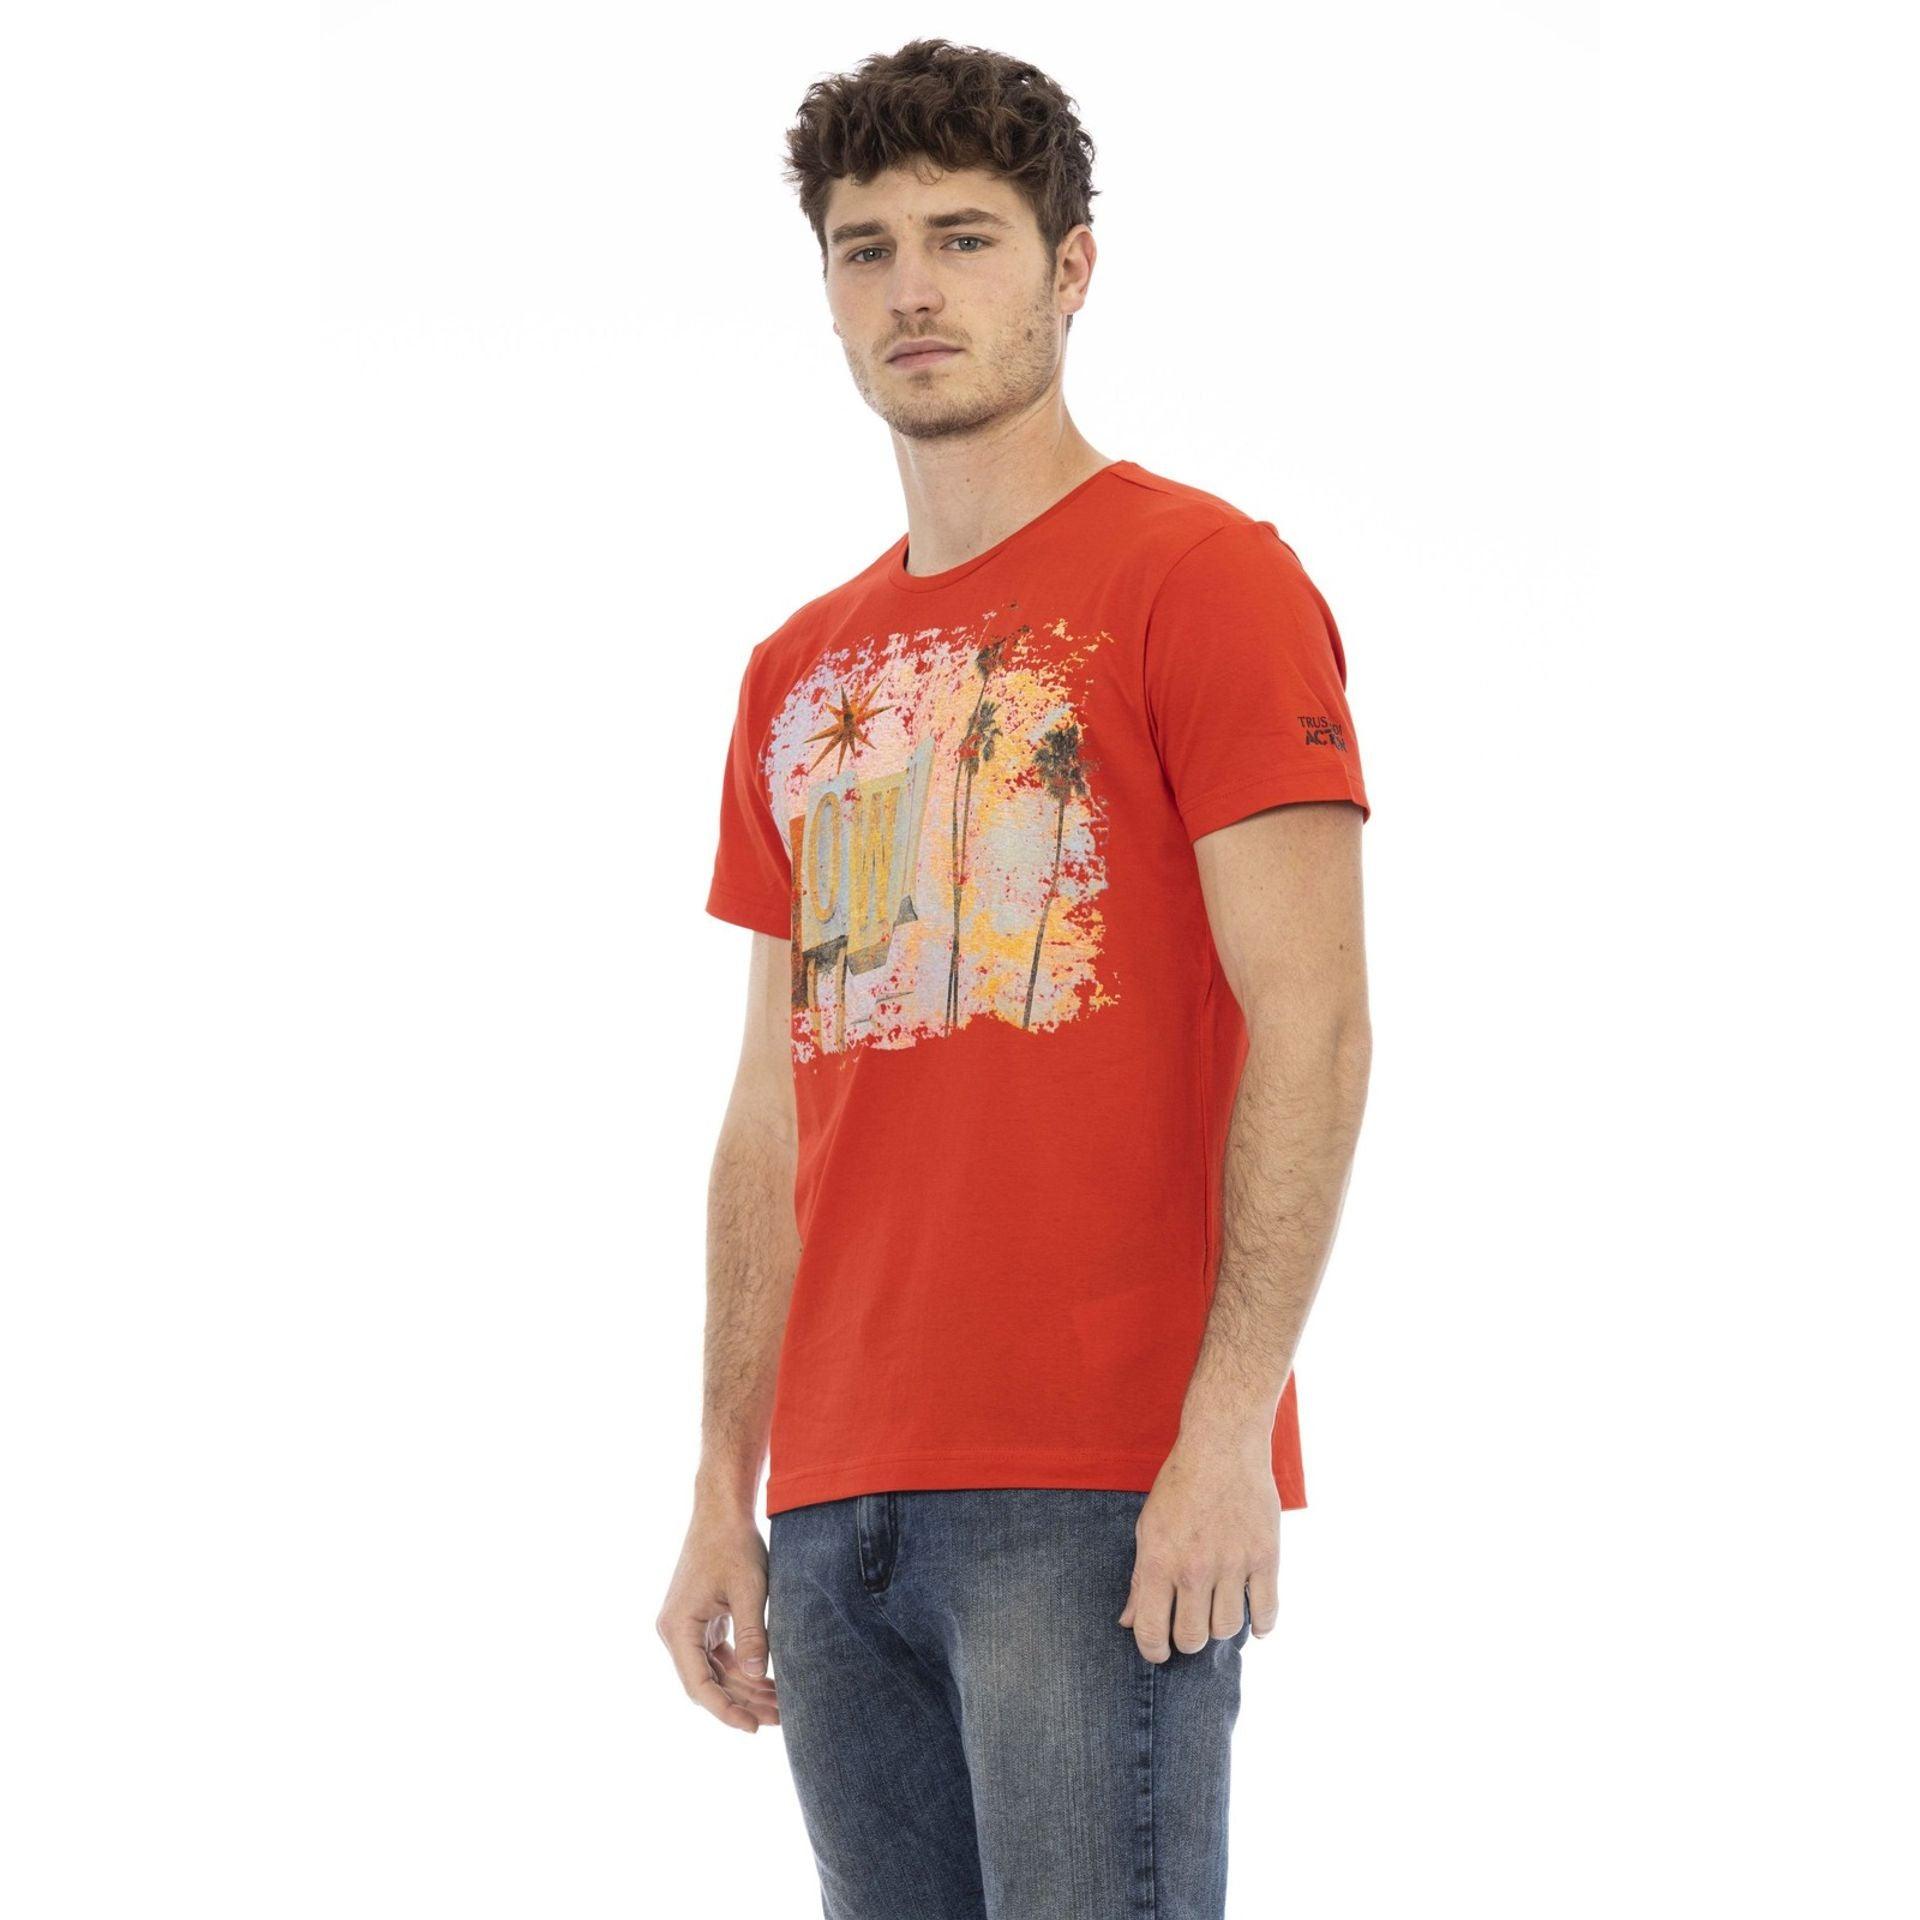 Trussardi Action Men T-shirts - Red Brand T-shirts - T-Shirt - Guocali